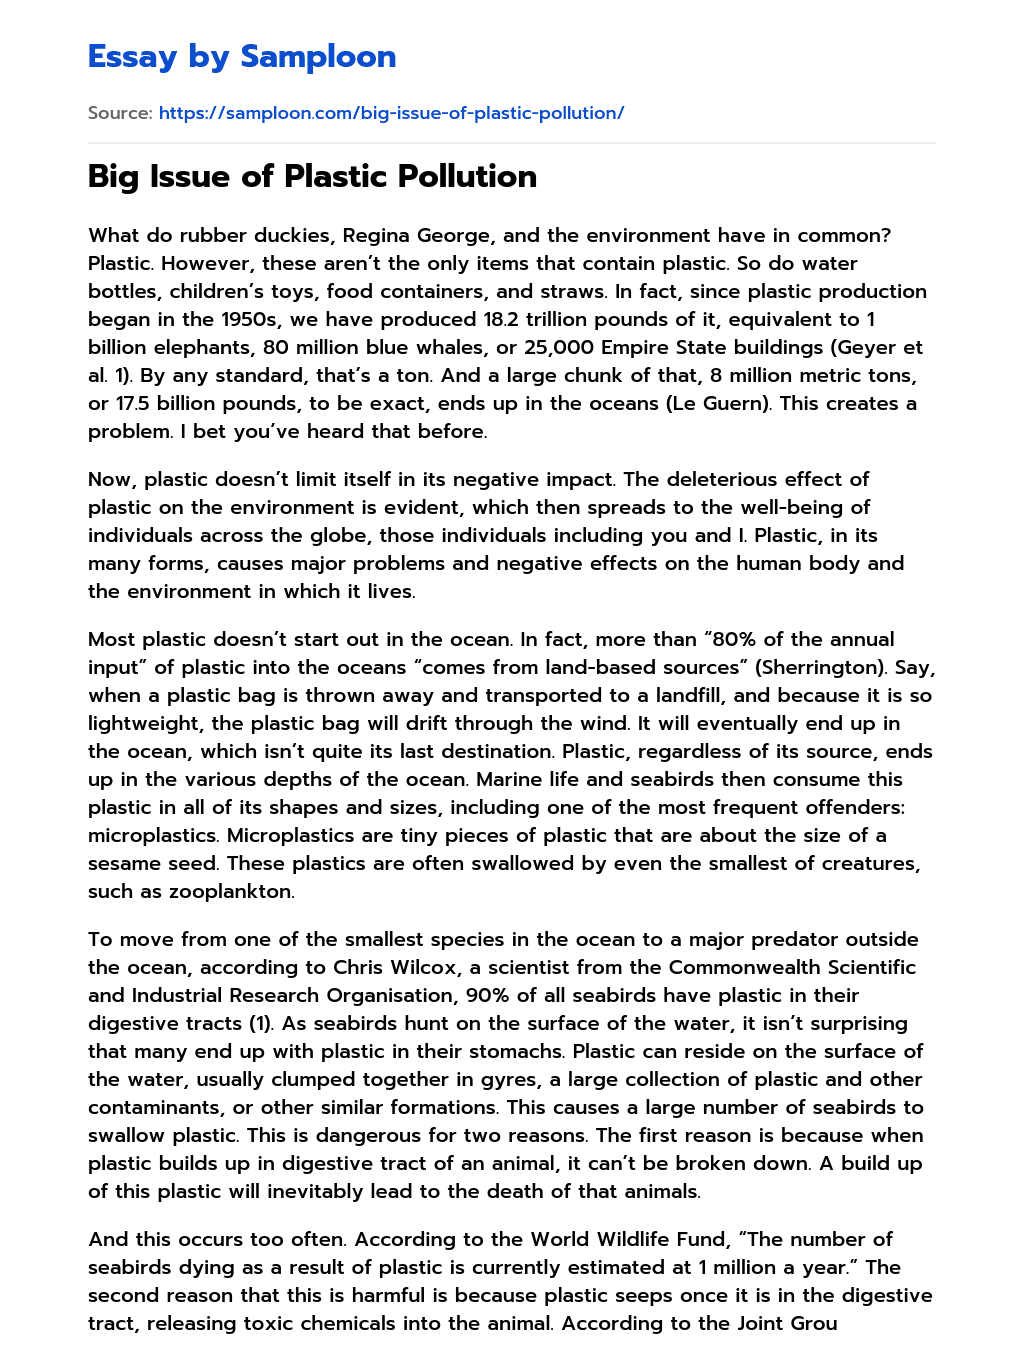 Big Issue of Plastic Pollution essay